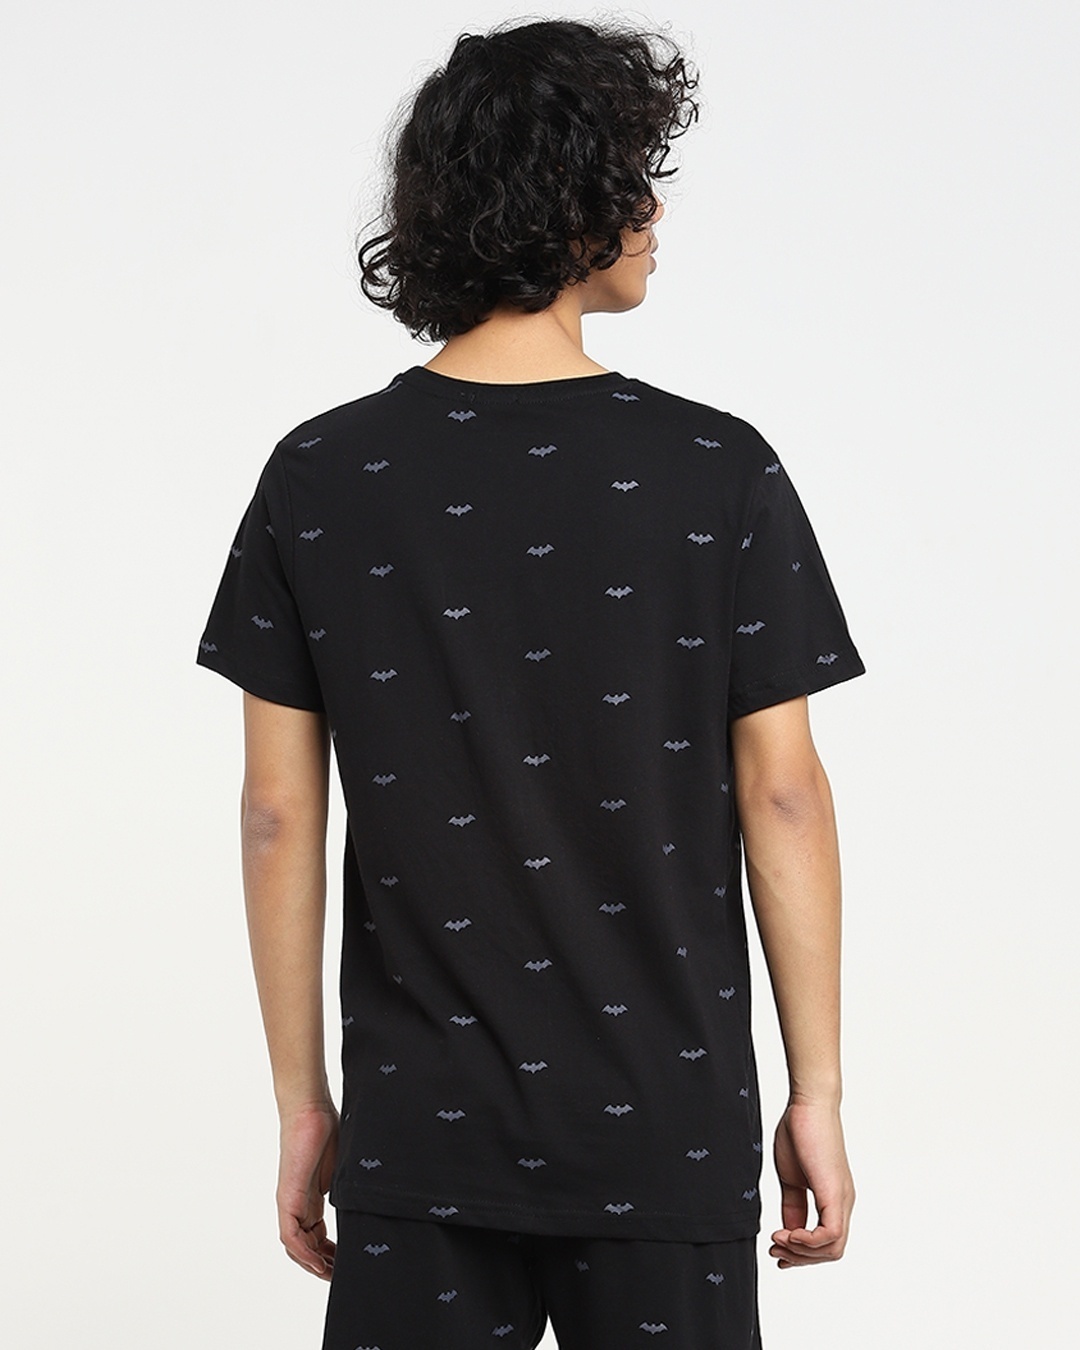 Shop Batman Minimal Half Sleeves AOP T-Shirt-Design